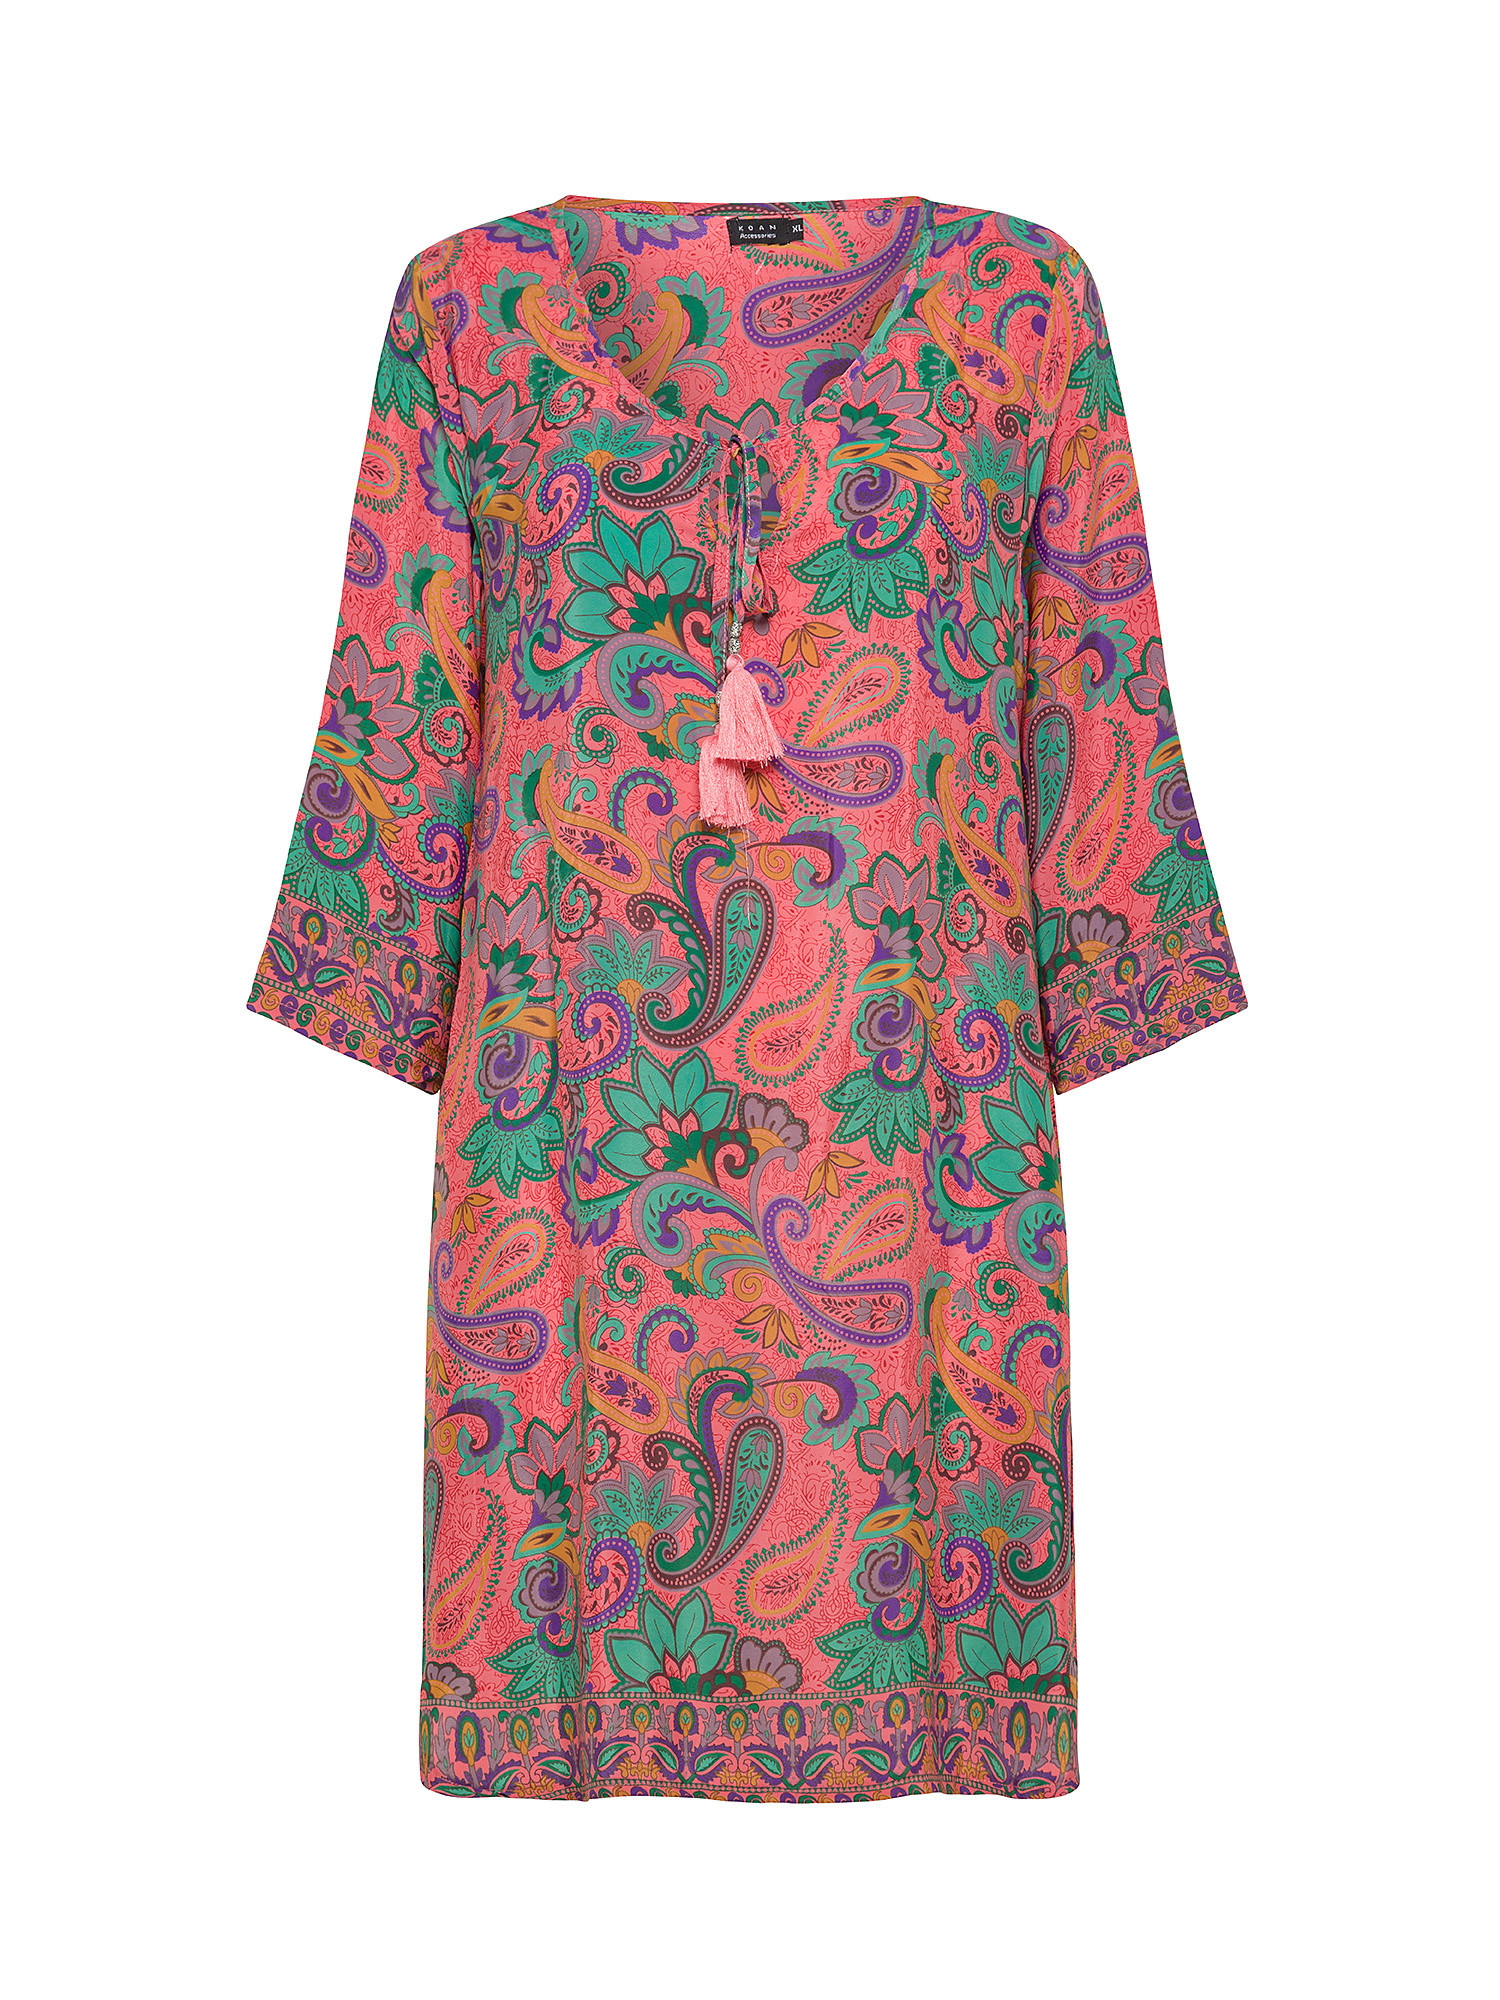 Koan - Patterned tunic, Pink, large image number 0